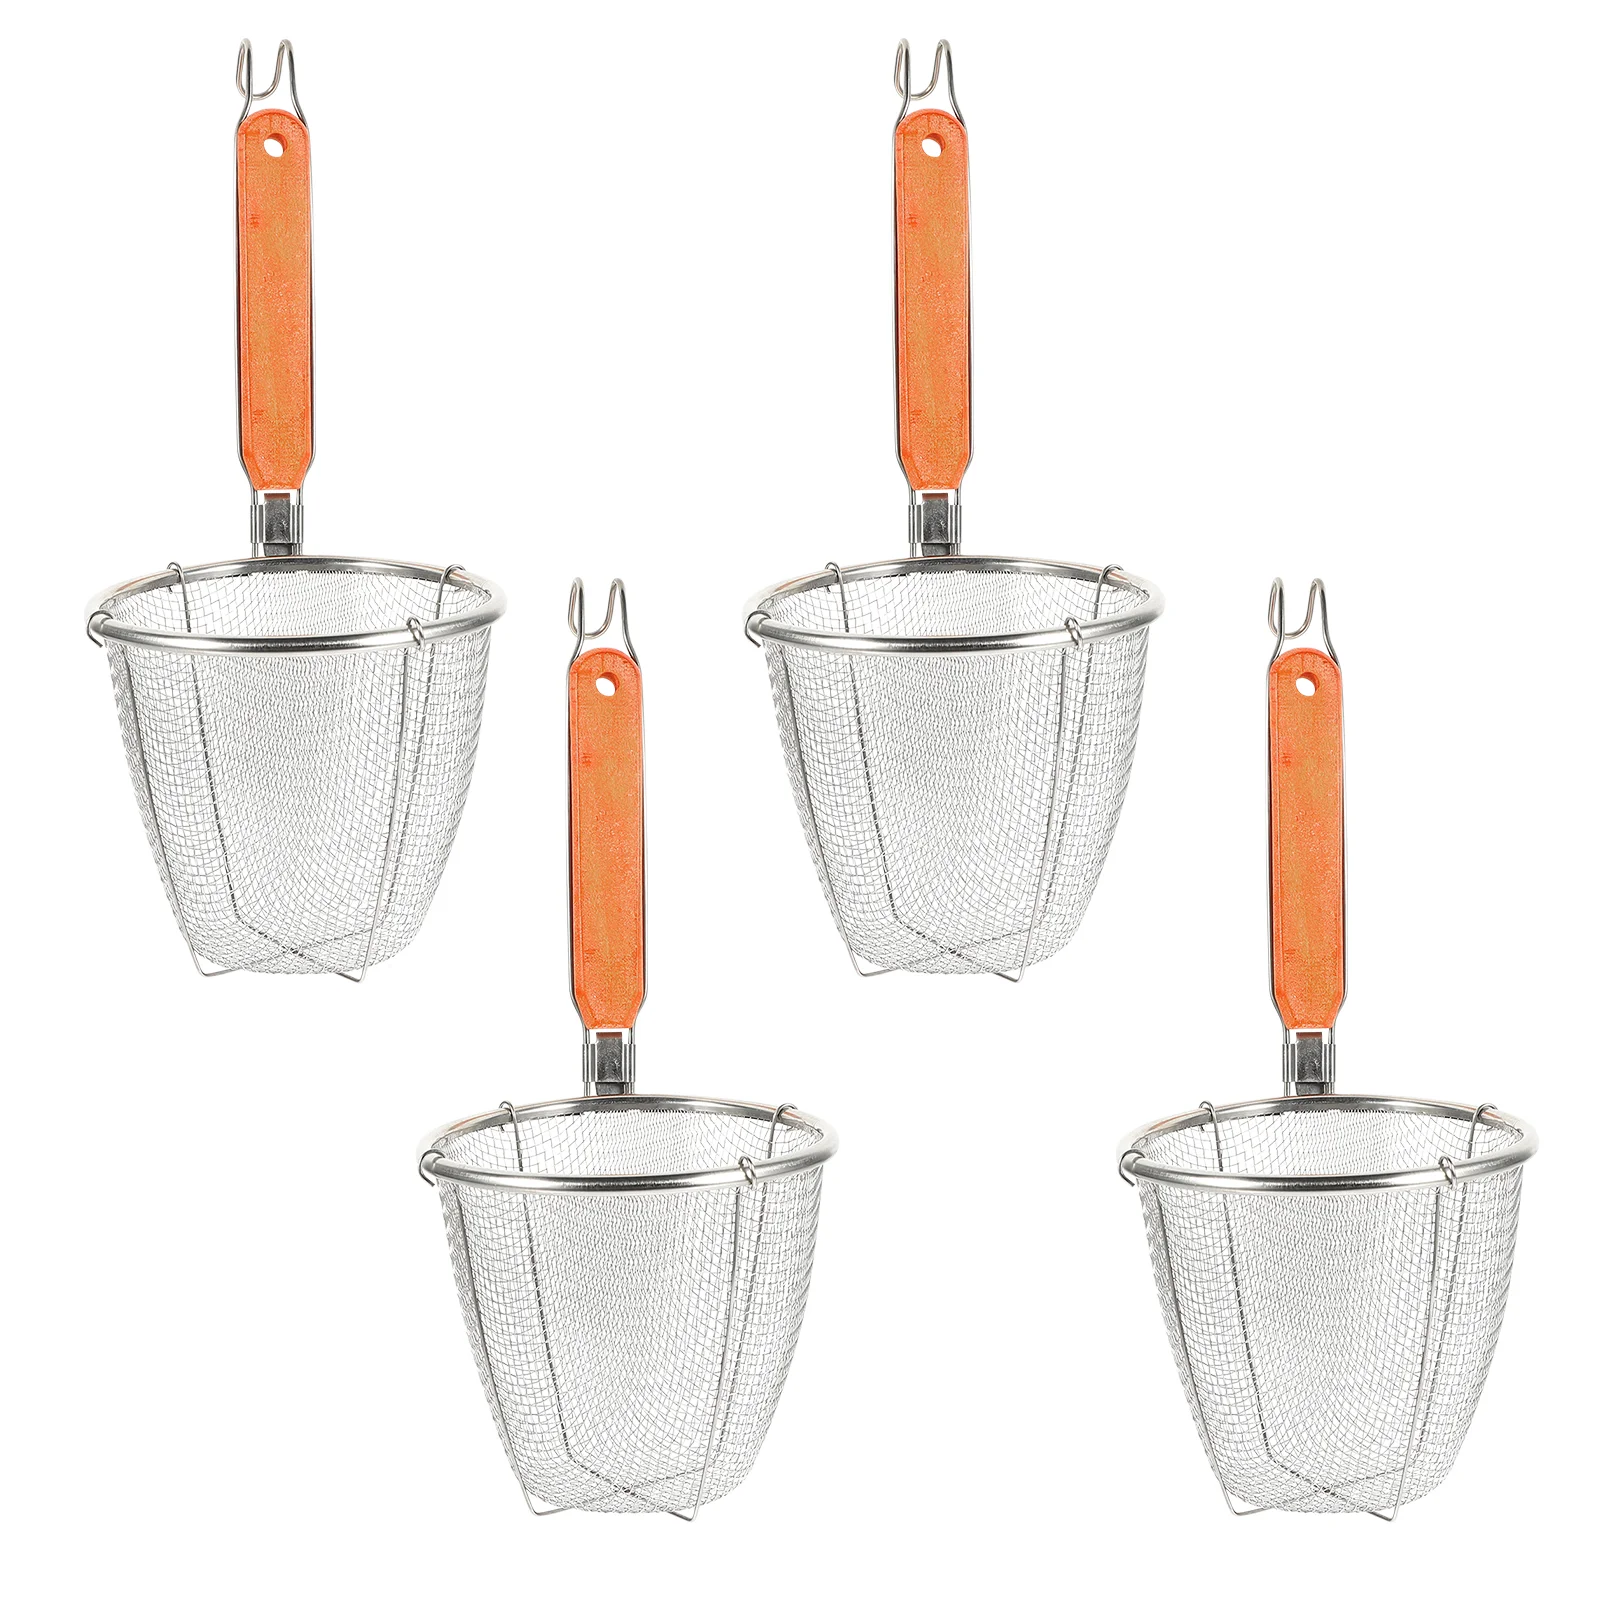 

4 Pcs Stainless Steel Filter Mesh Noodle Colander Spoon Strainer Household Pasta Cooker Basket Filtering Ladle Spoons